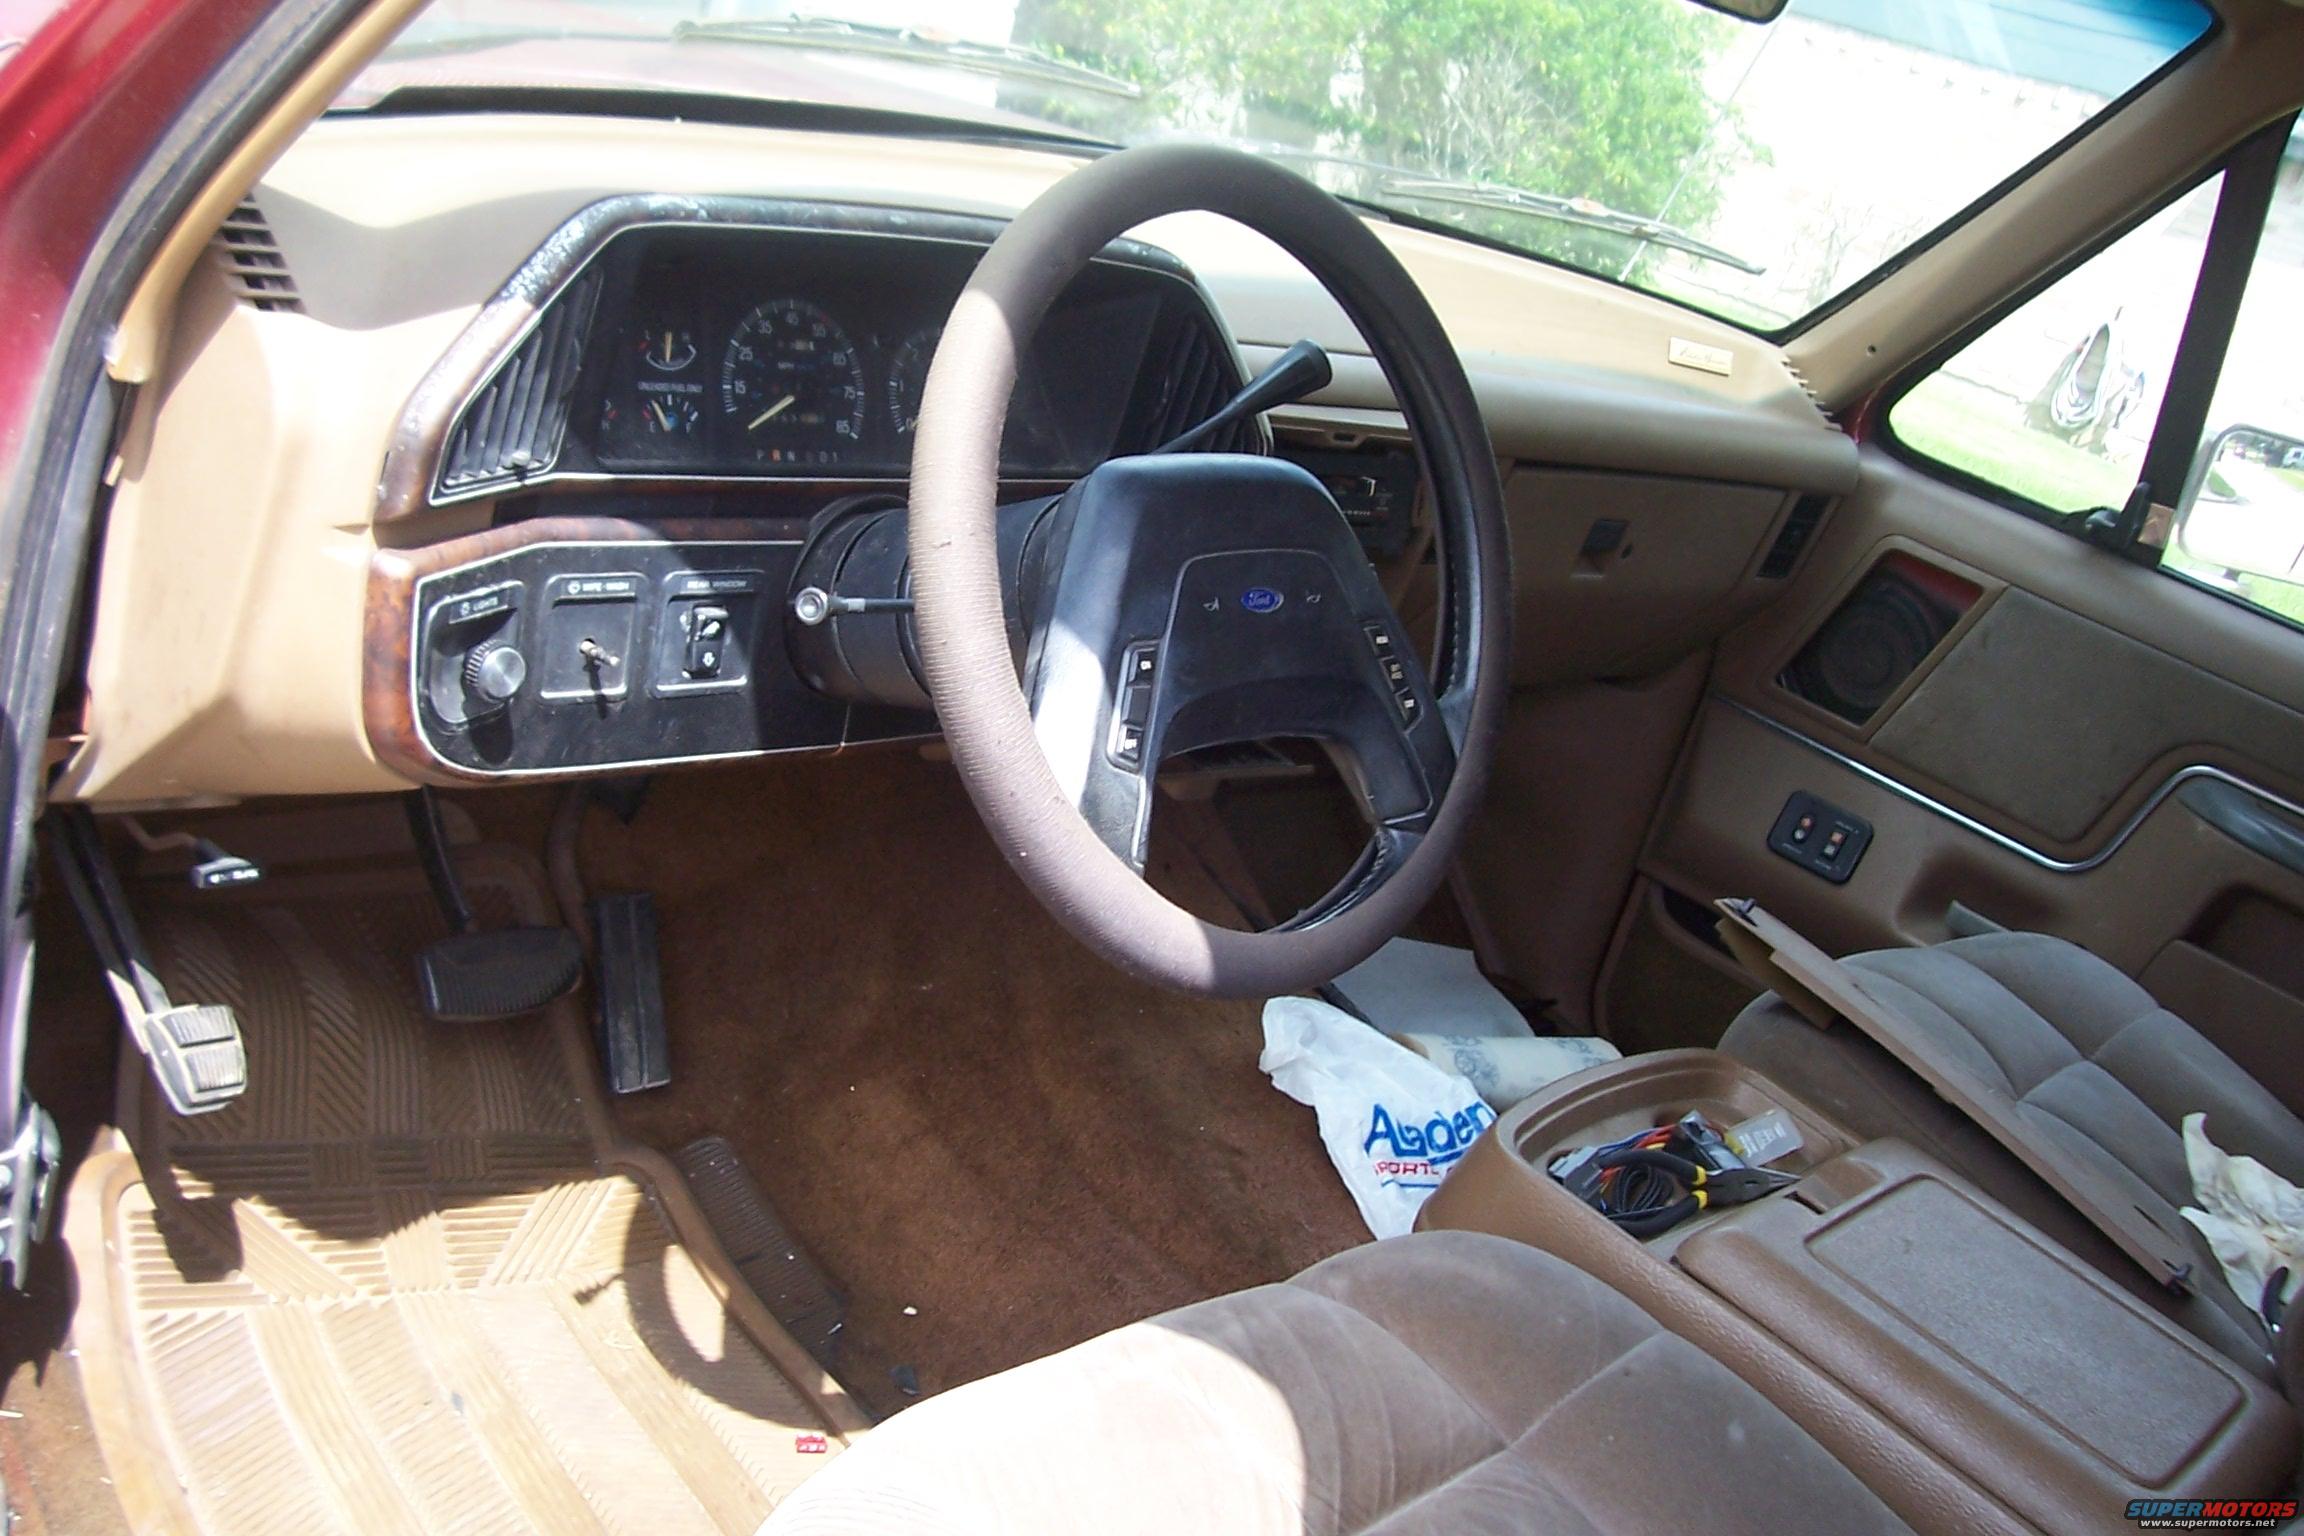 1995 Ford f350 dash kit #3